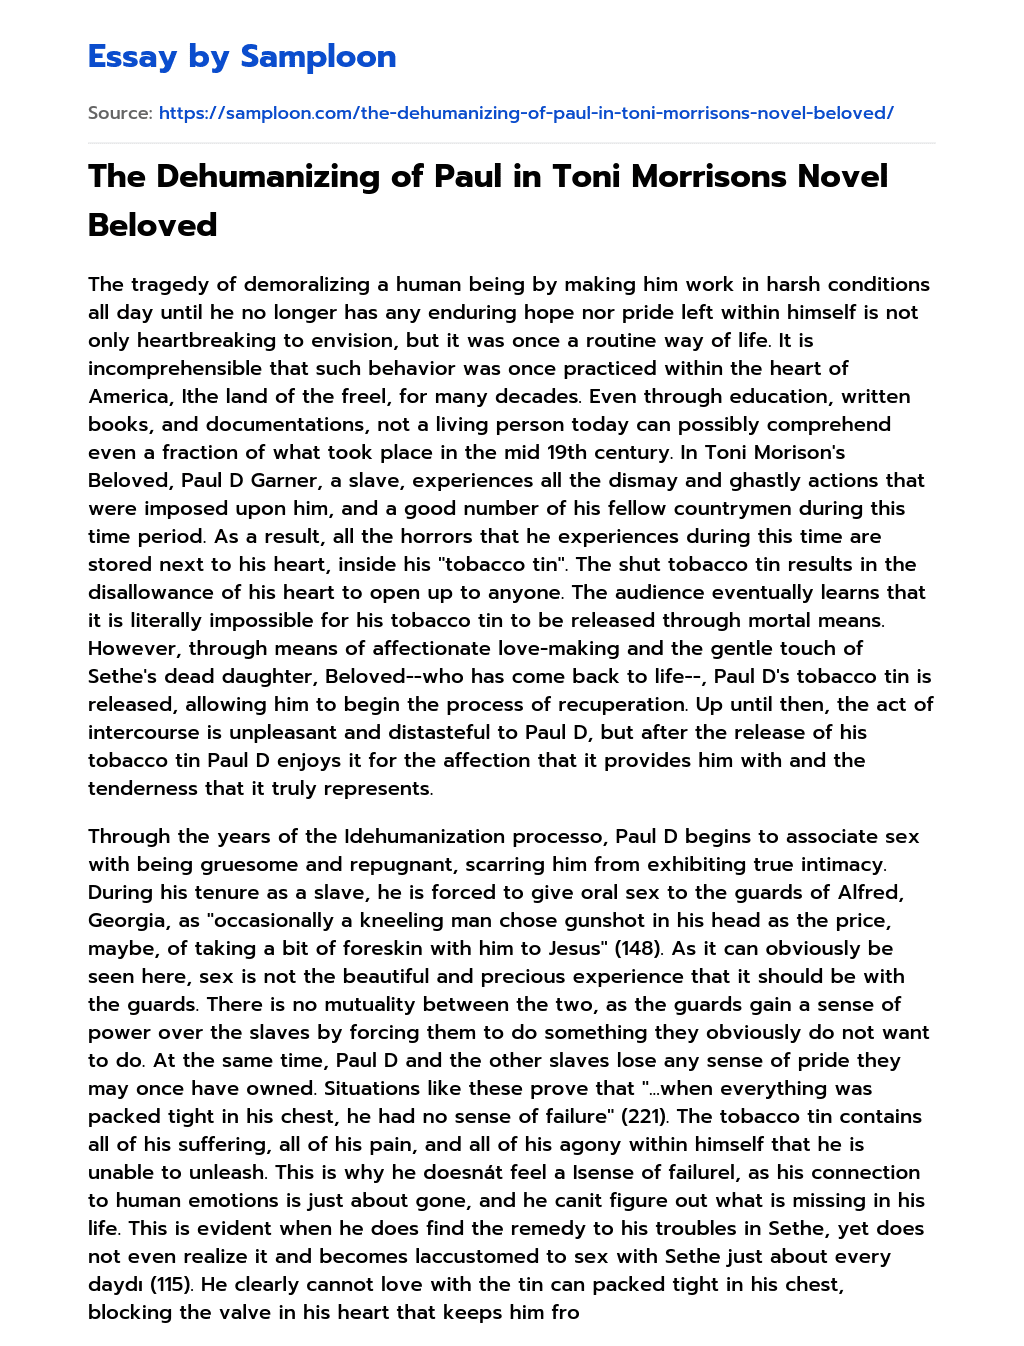 The Dehumanizing of Paul in Toni Morrisons Novel Beloved essay